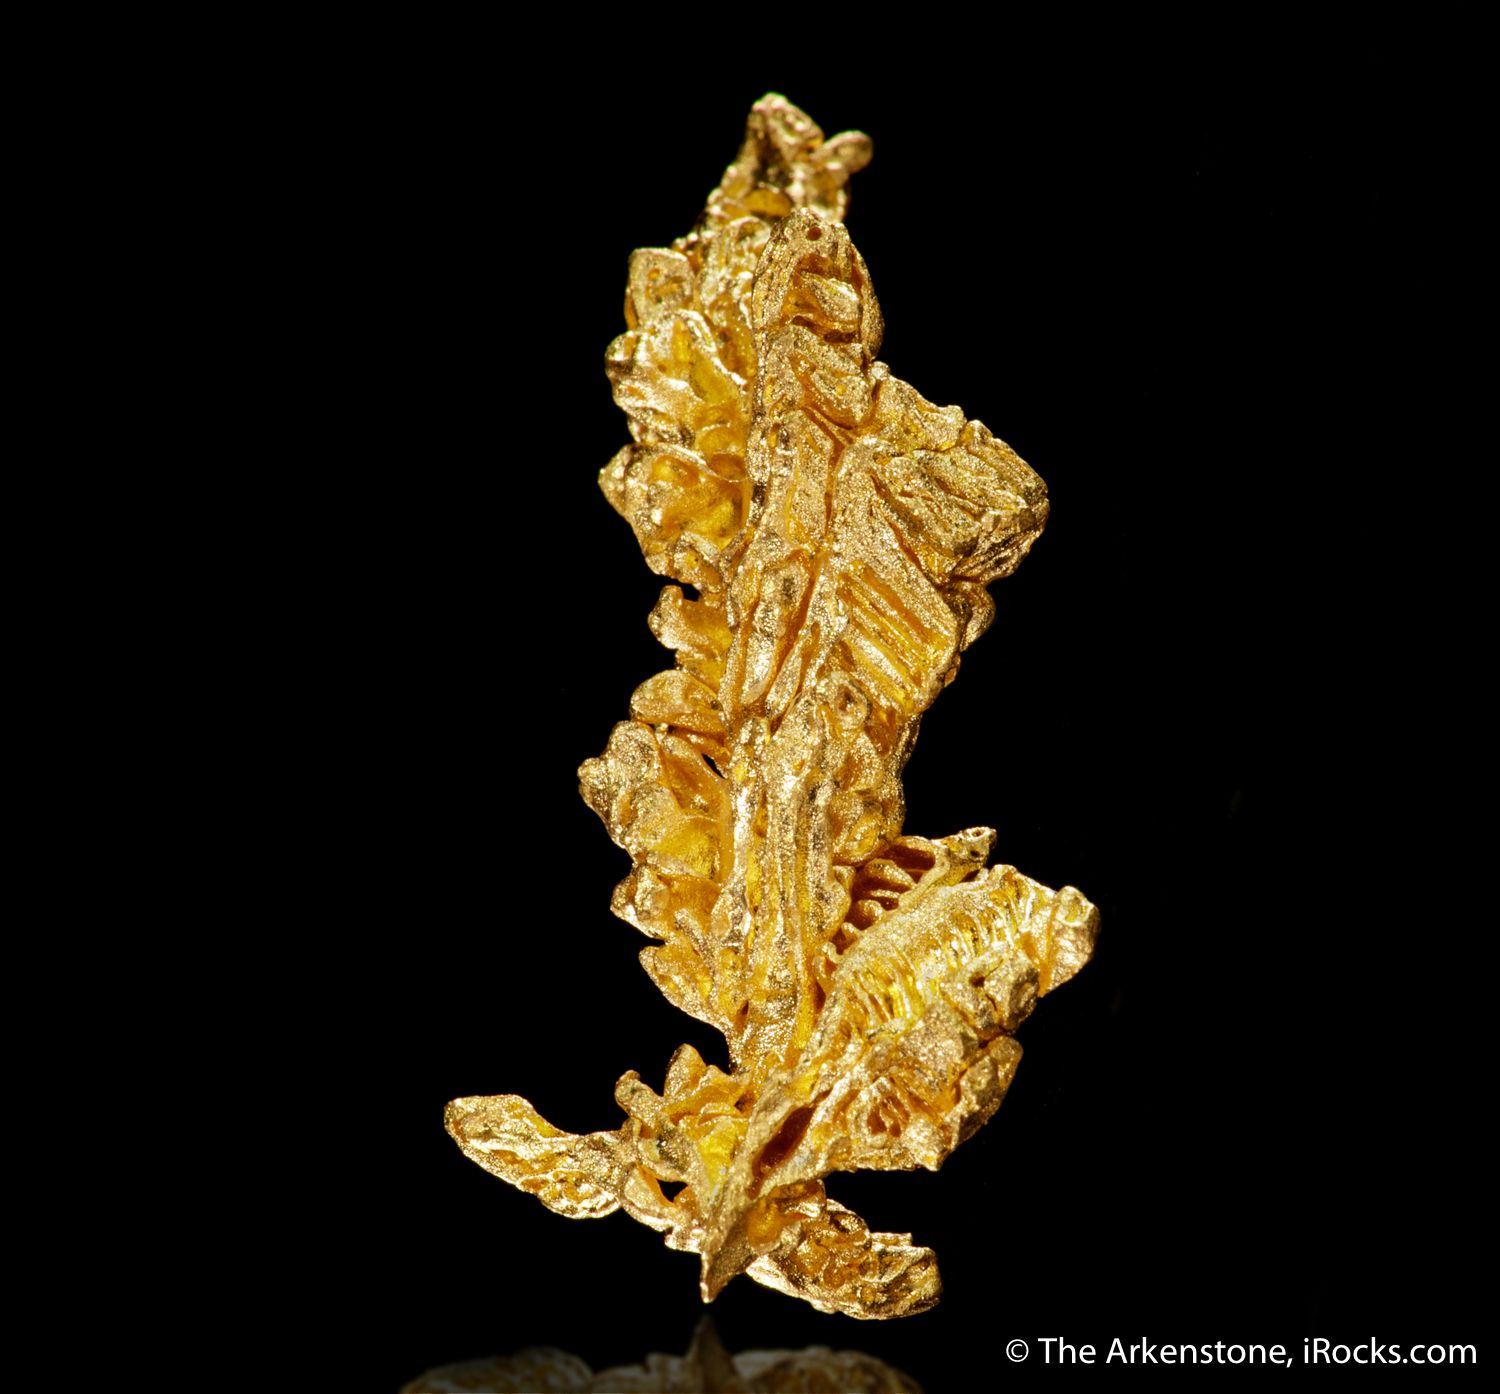 Gold - GOLD21-13 - Pontes e Lacerda - Brazil Mineral Specimen